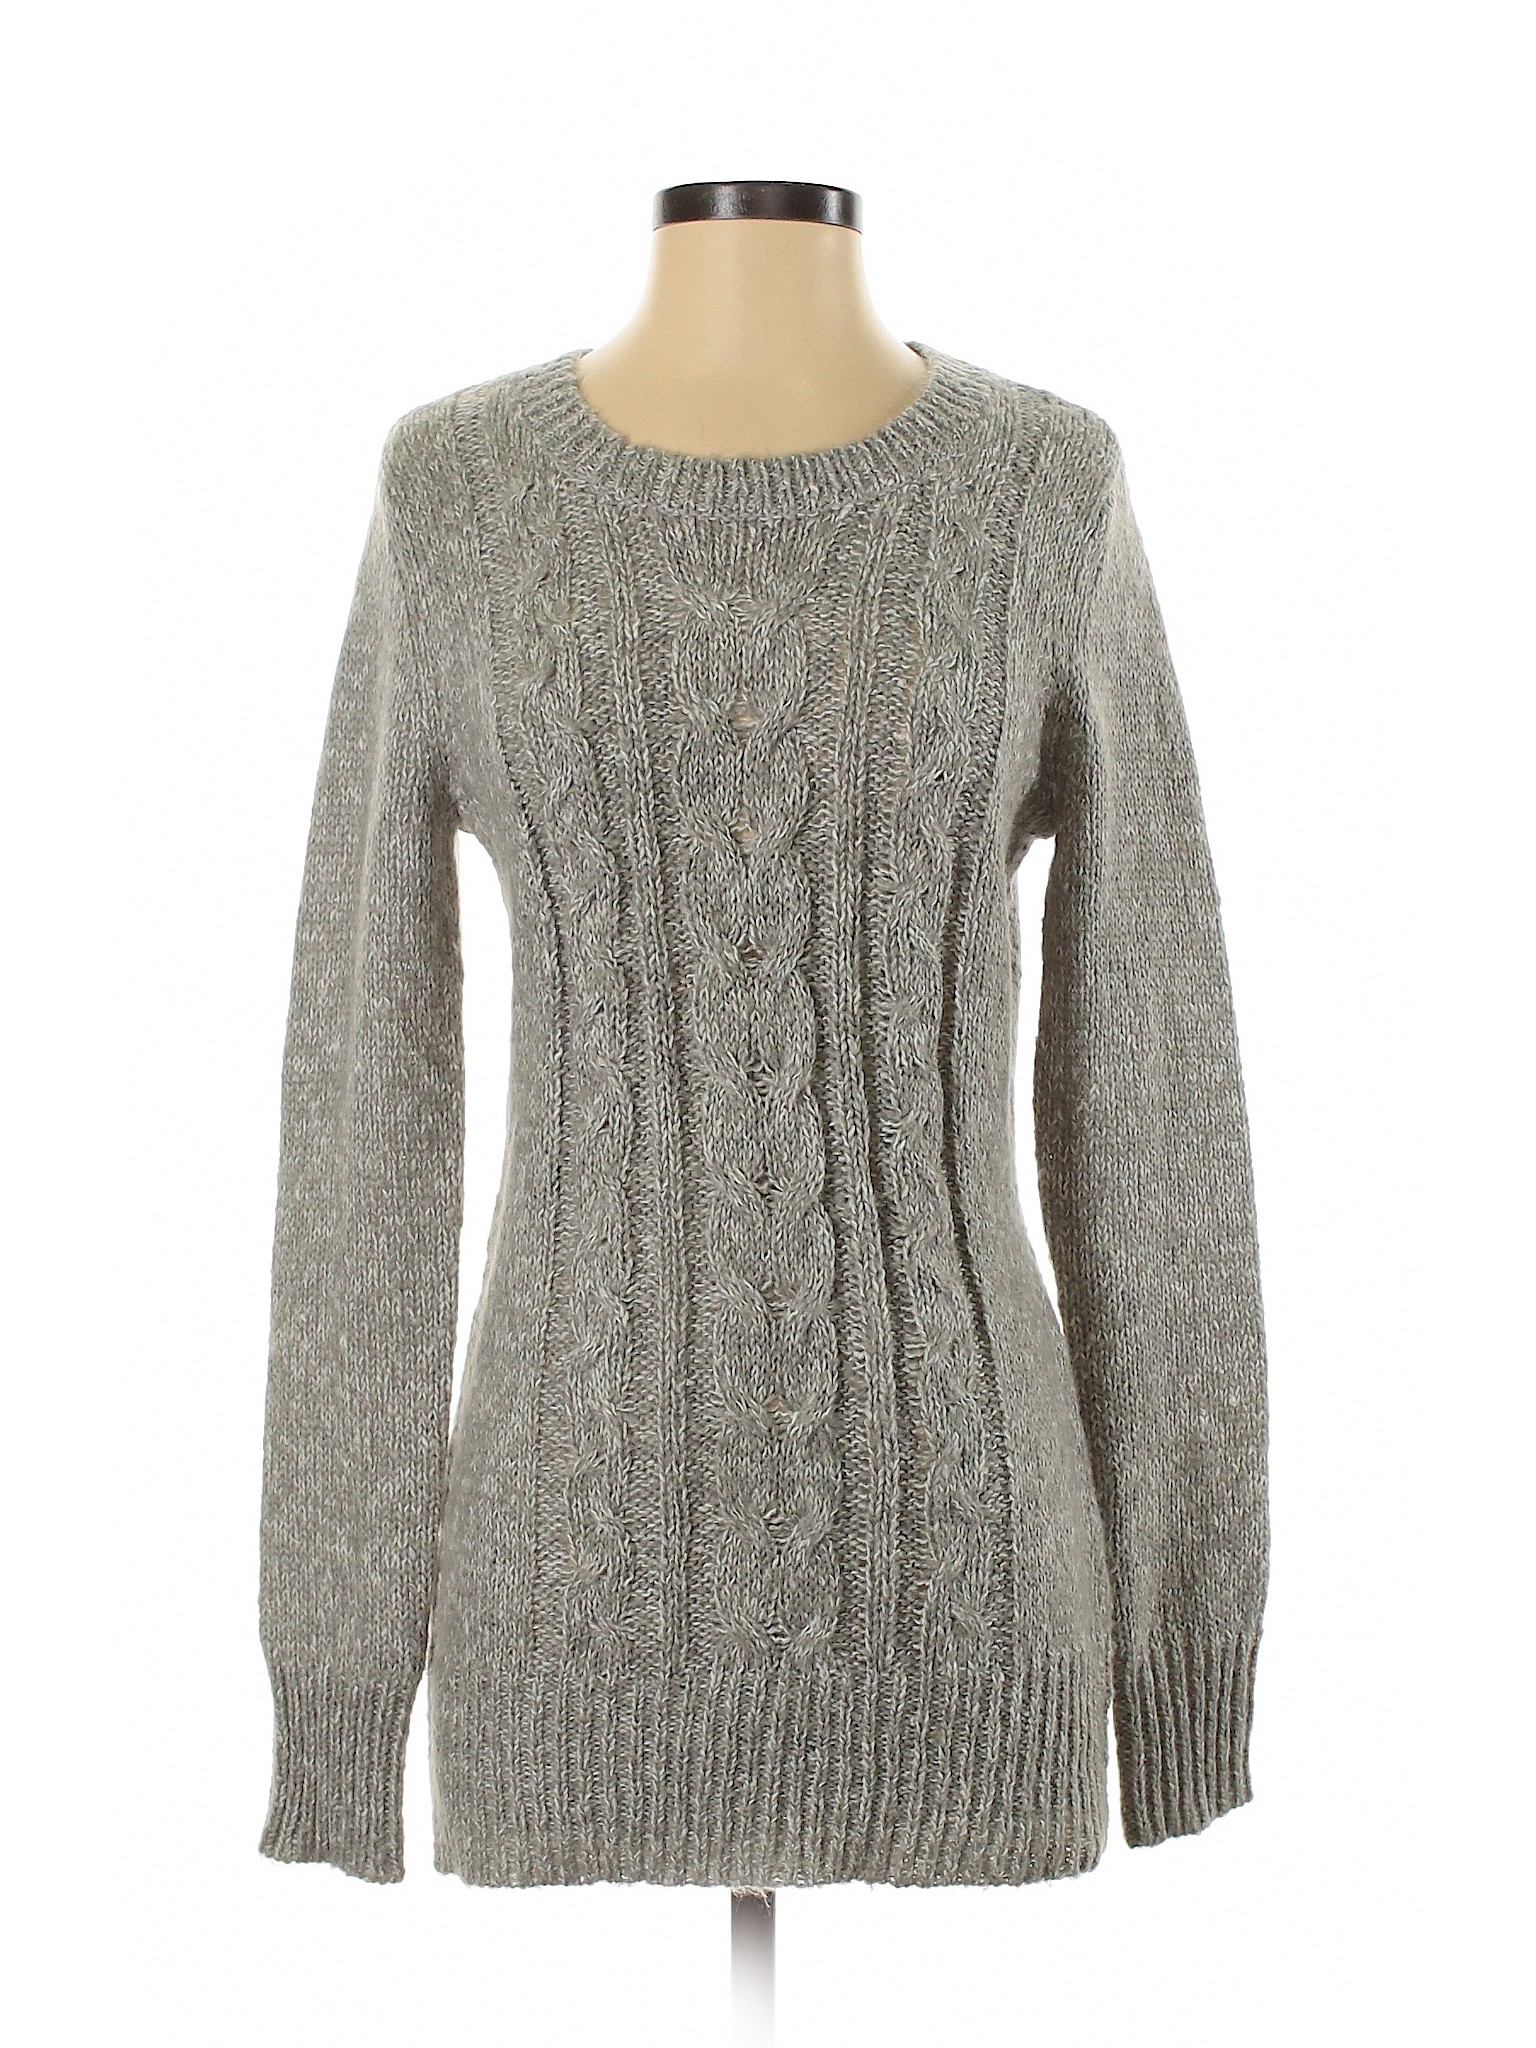 NWT St. John's Bay Women Gray Pullover Sweater S | eBay